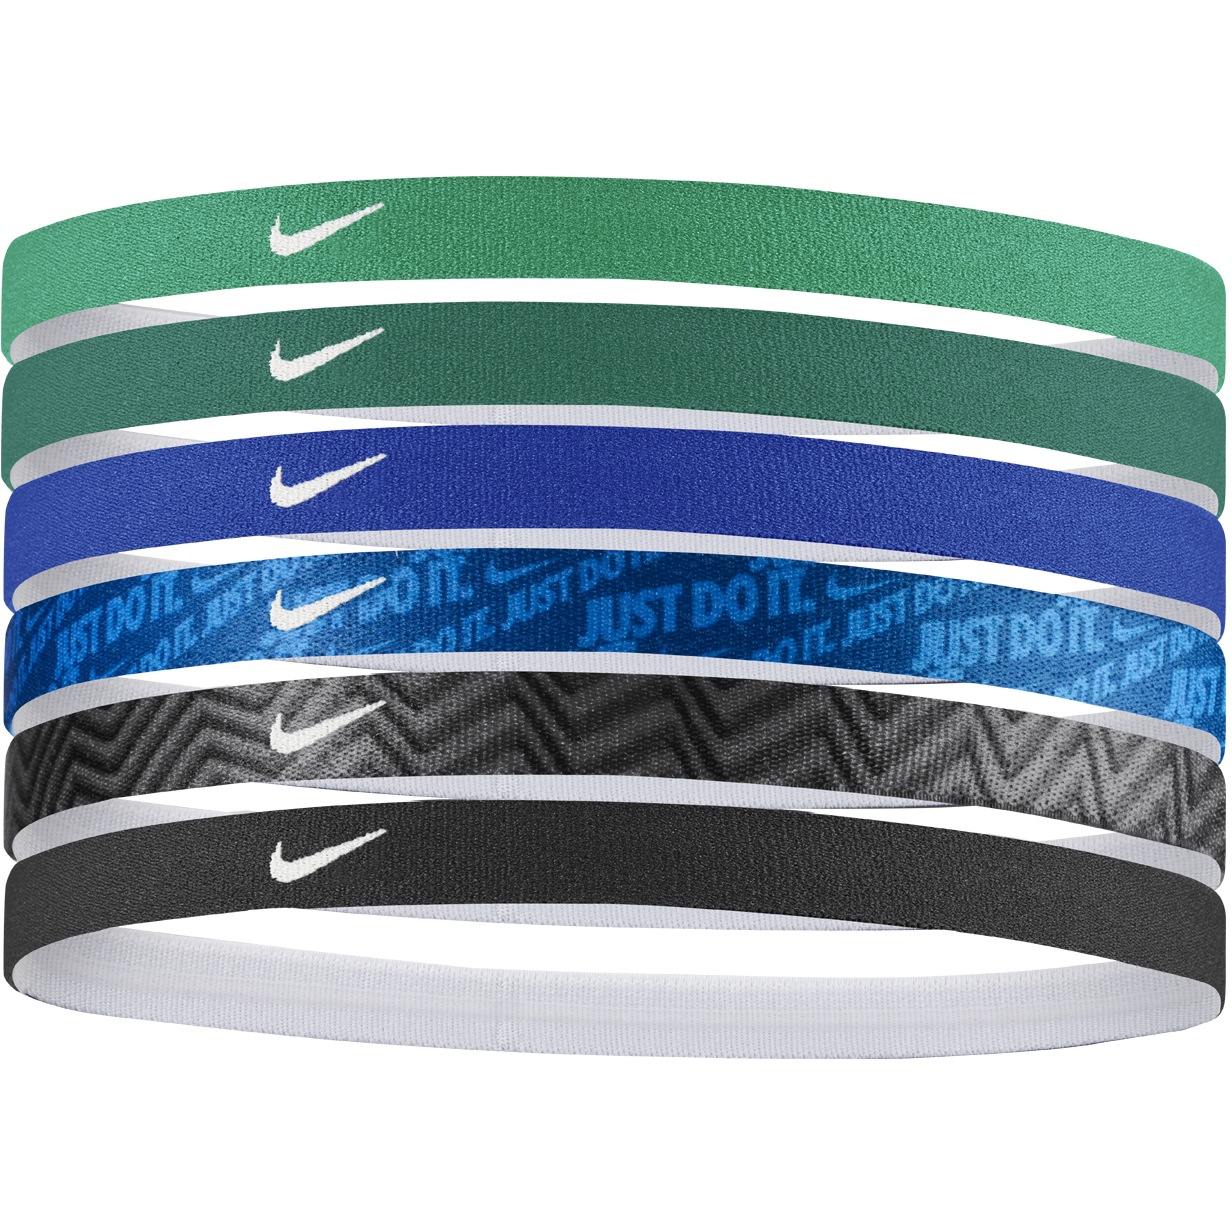 Picture of Nike Headbands Printed (6 Pack) - stadium green/malachite/white 305